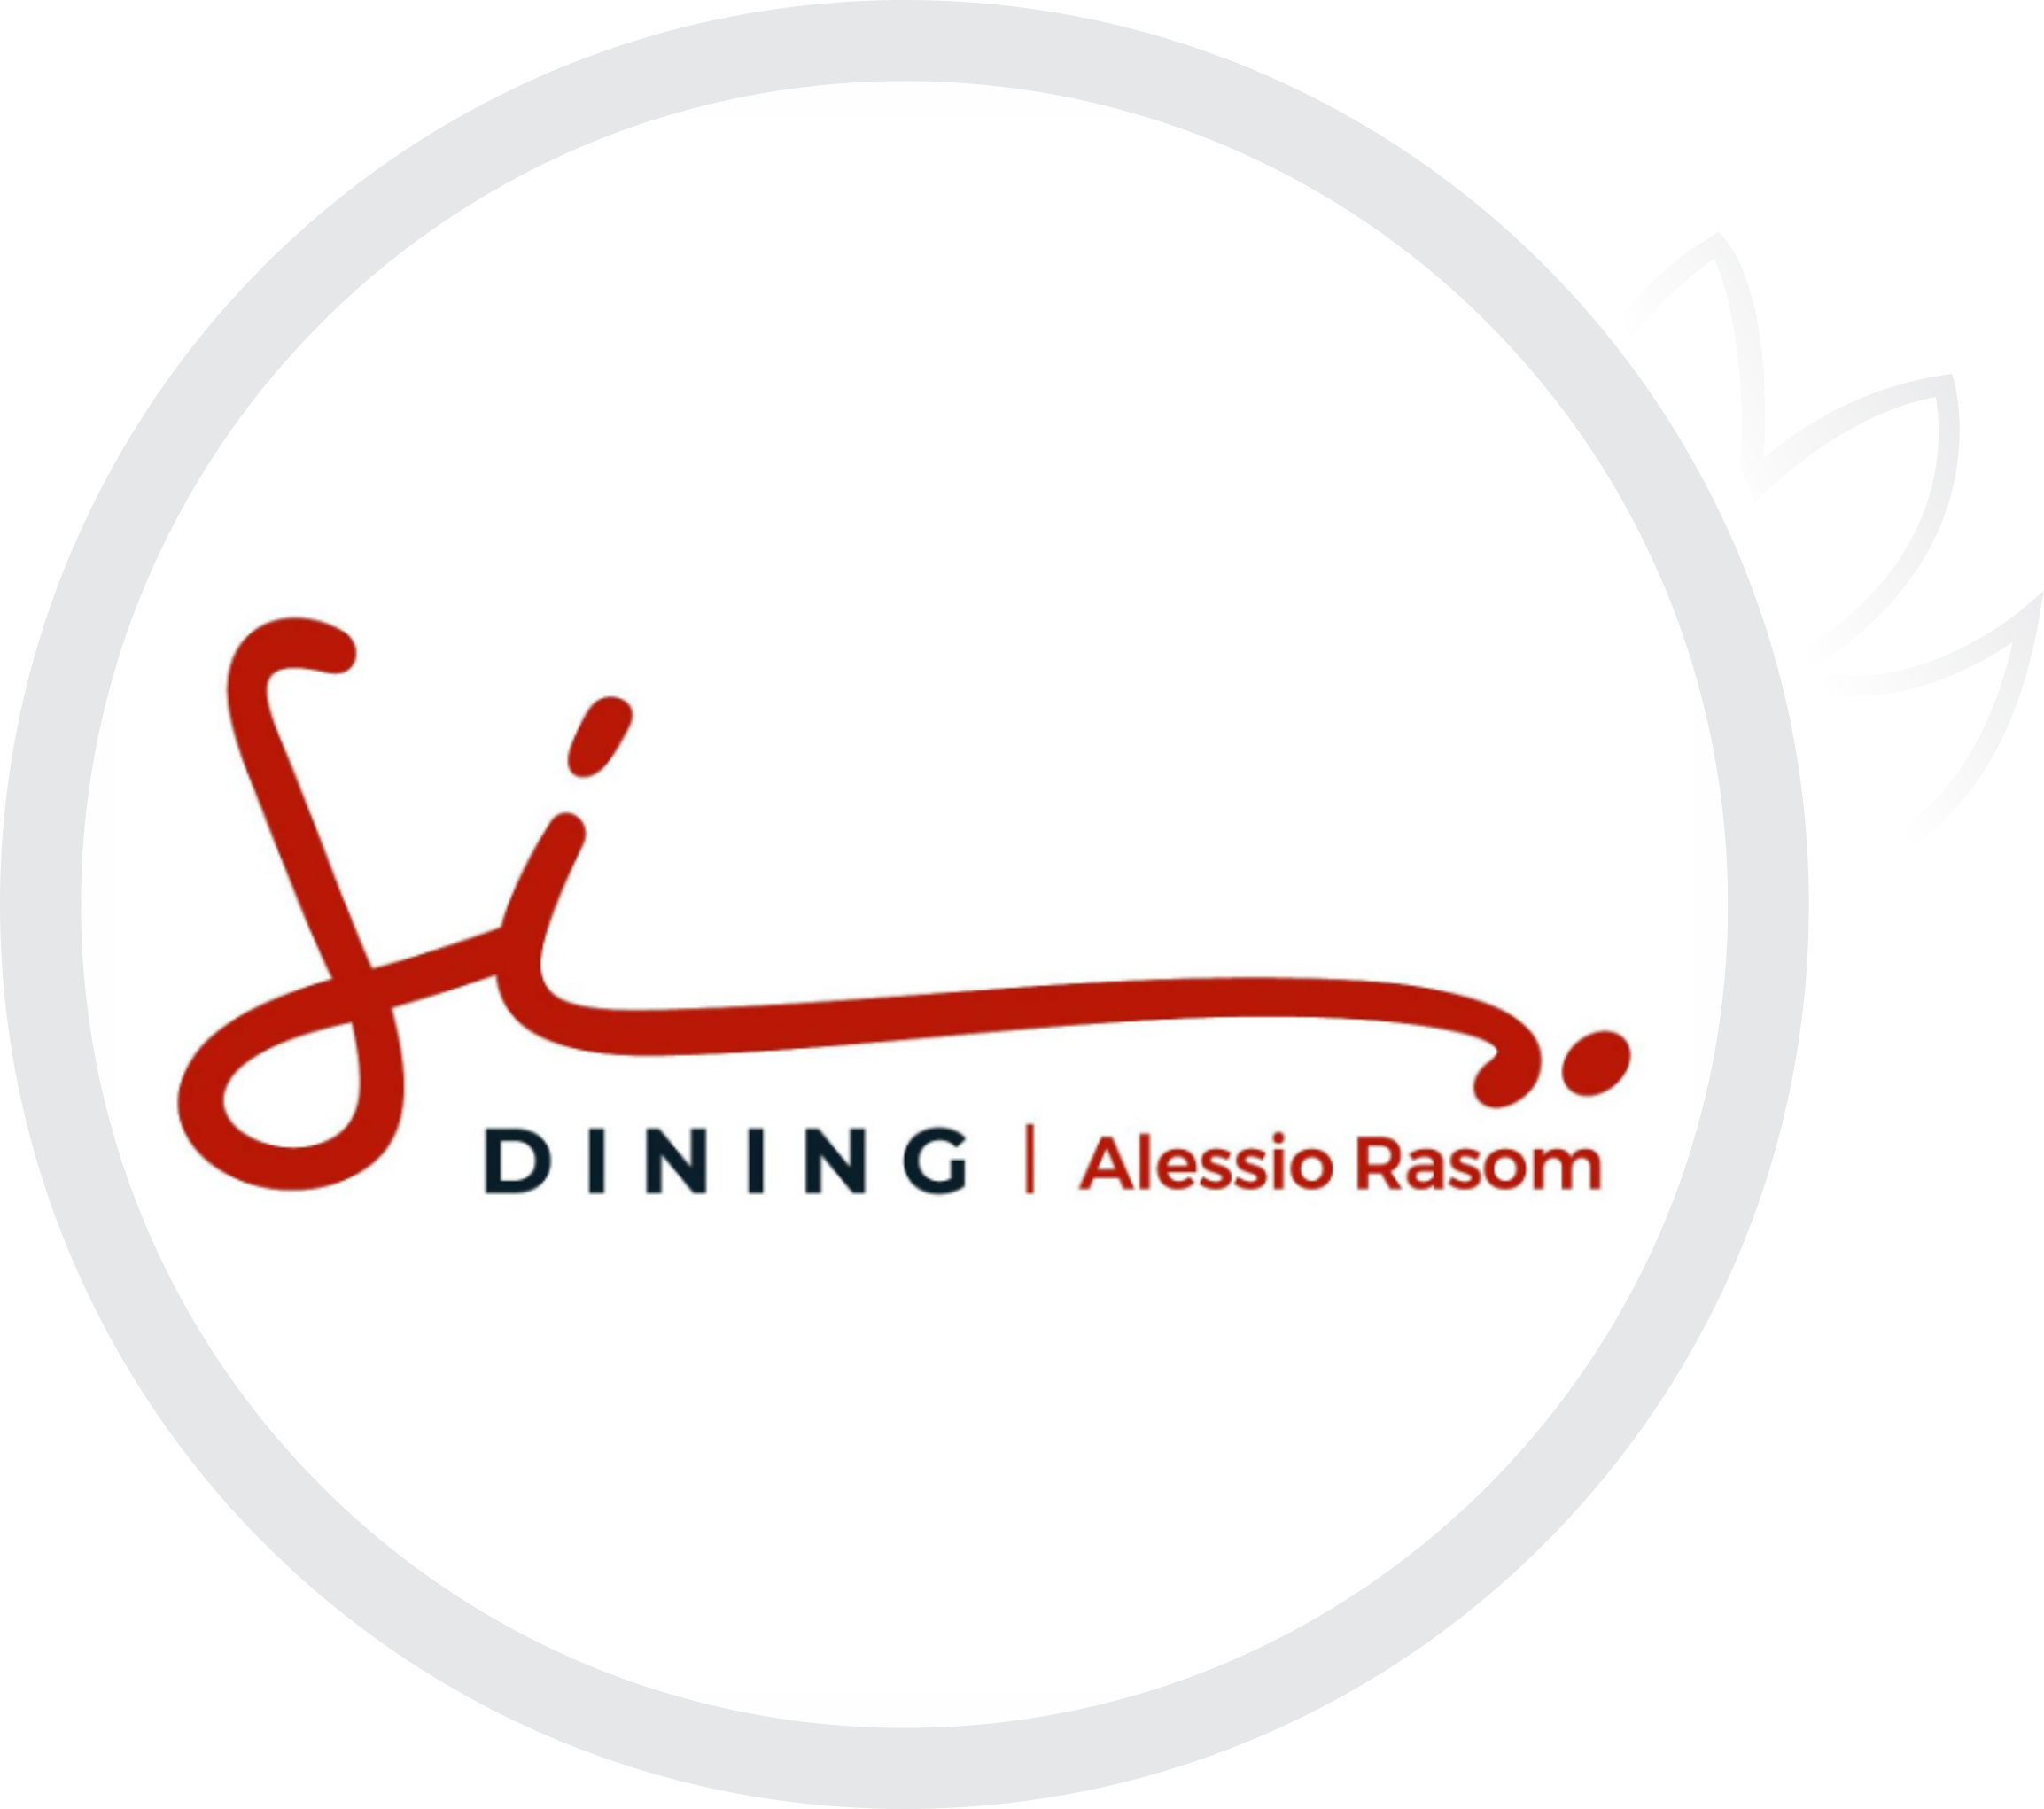 Si Dinning logo